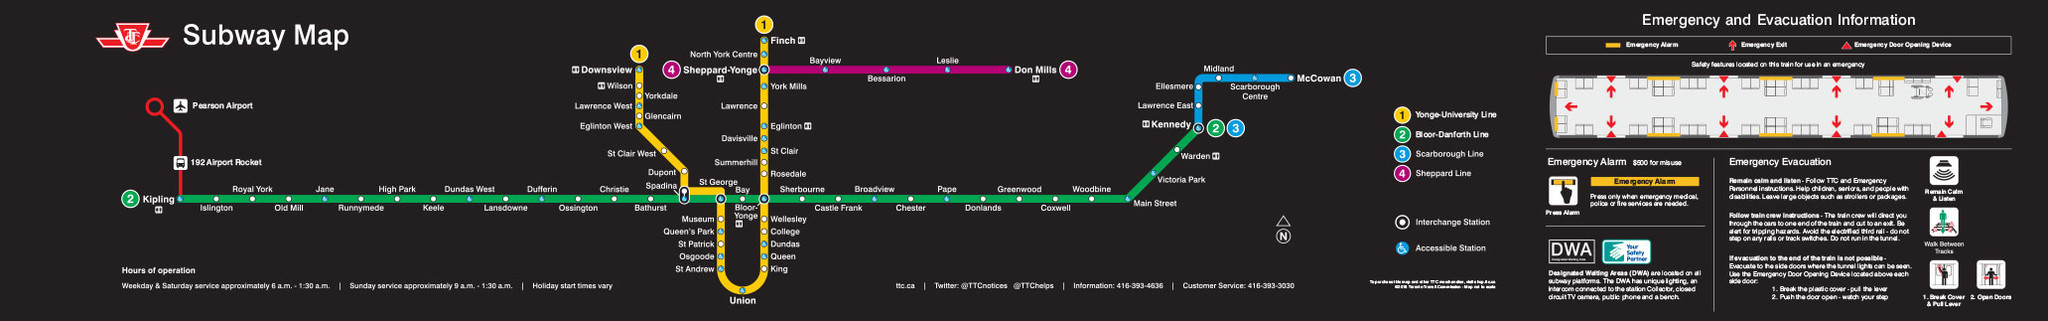 ttc-2015-subway-map.jpg